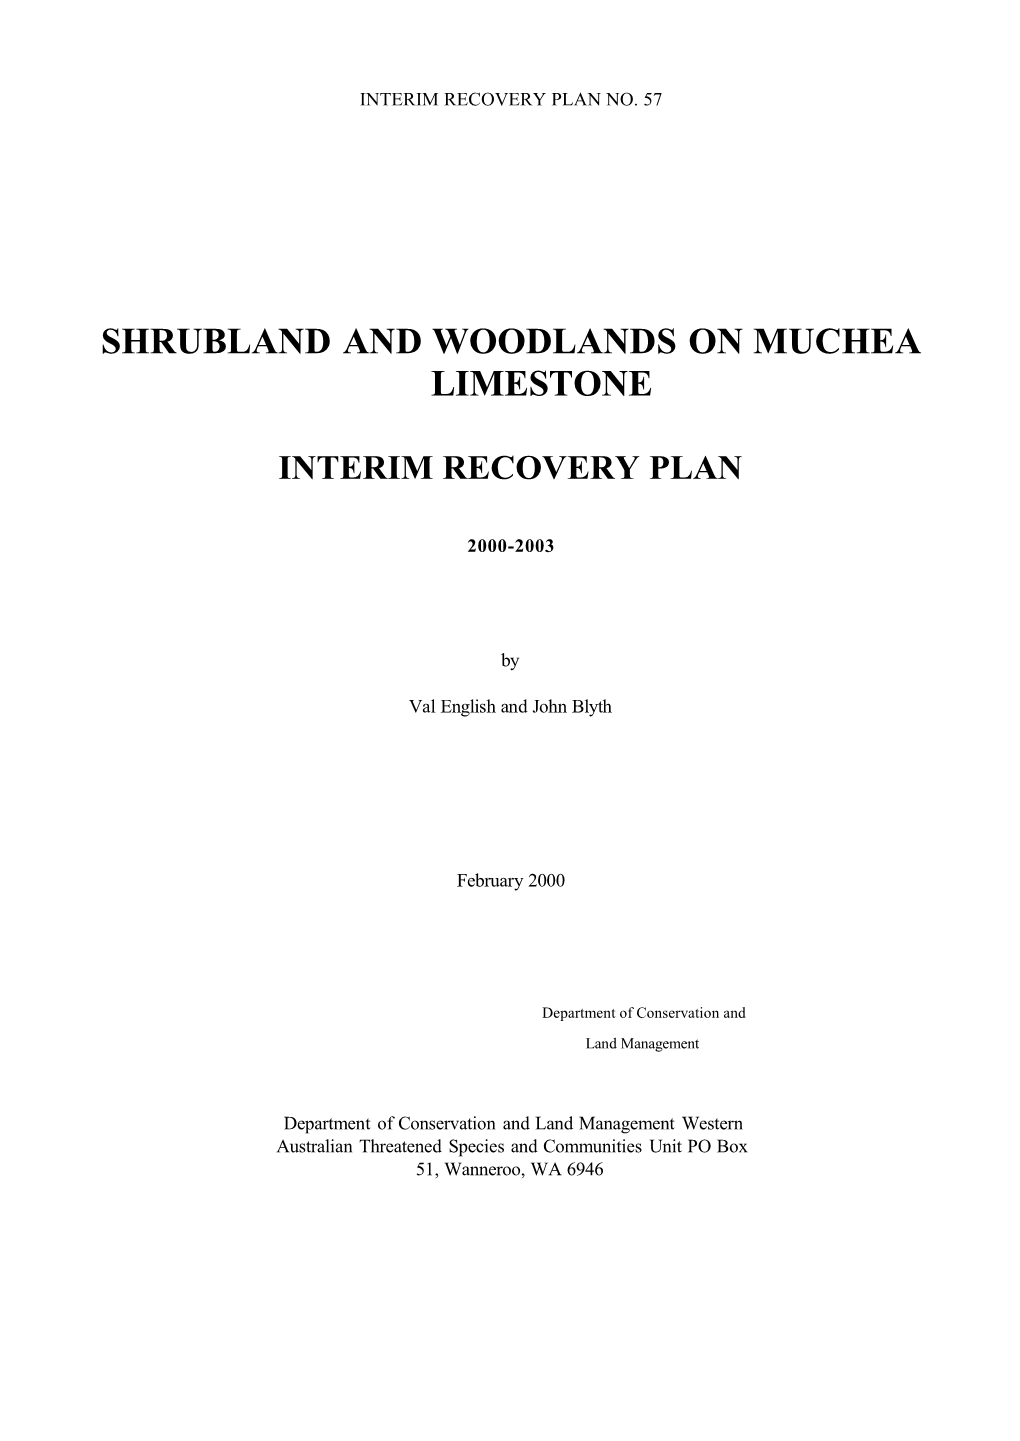 Shrublandand Woodlands on Muchea Limestone Interim Recovery Plan 2000-2003